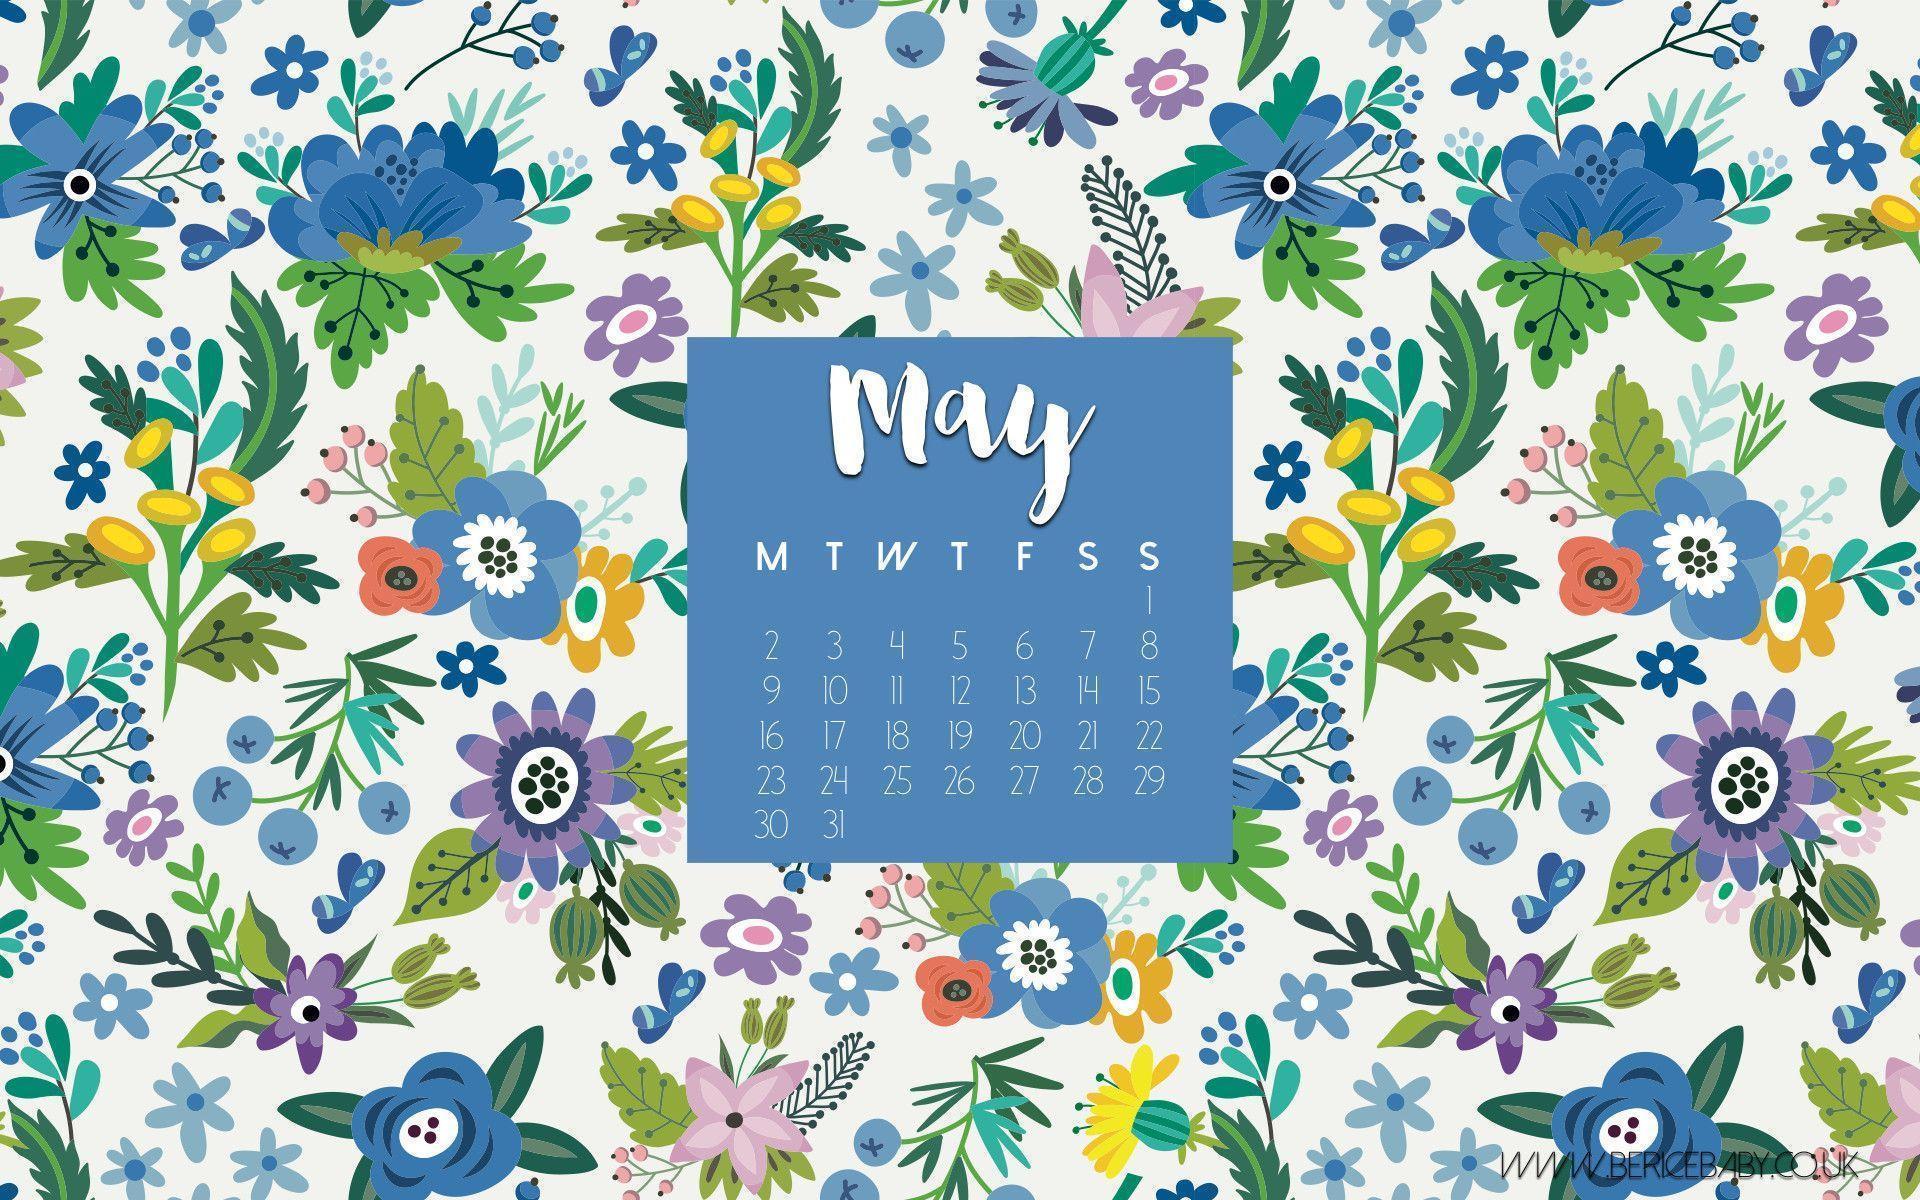 Free Desktop Calendar MAY 2016 Baby. London Lifestyle Blog